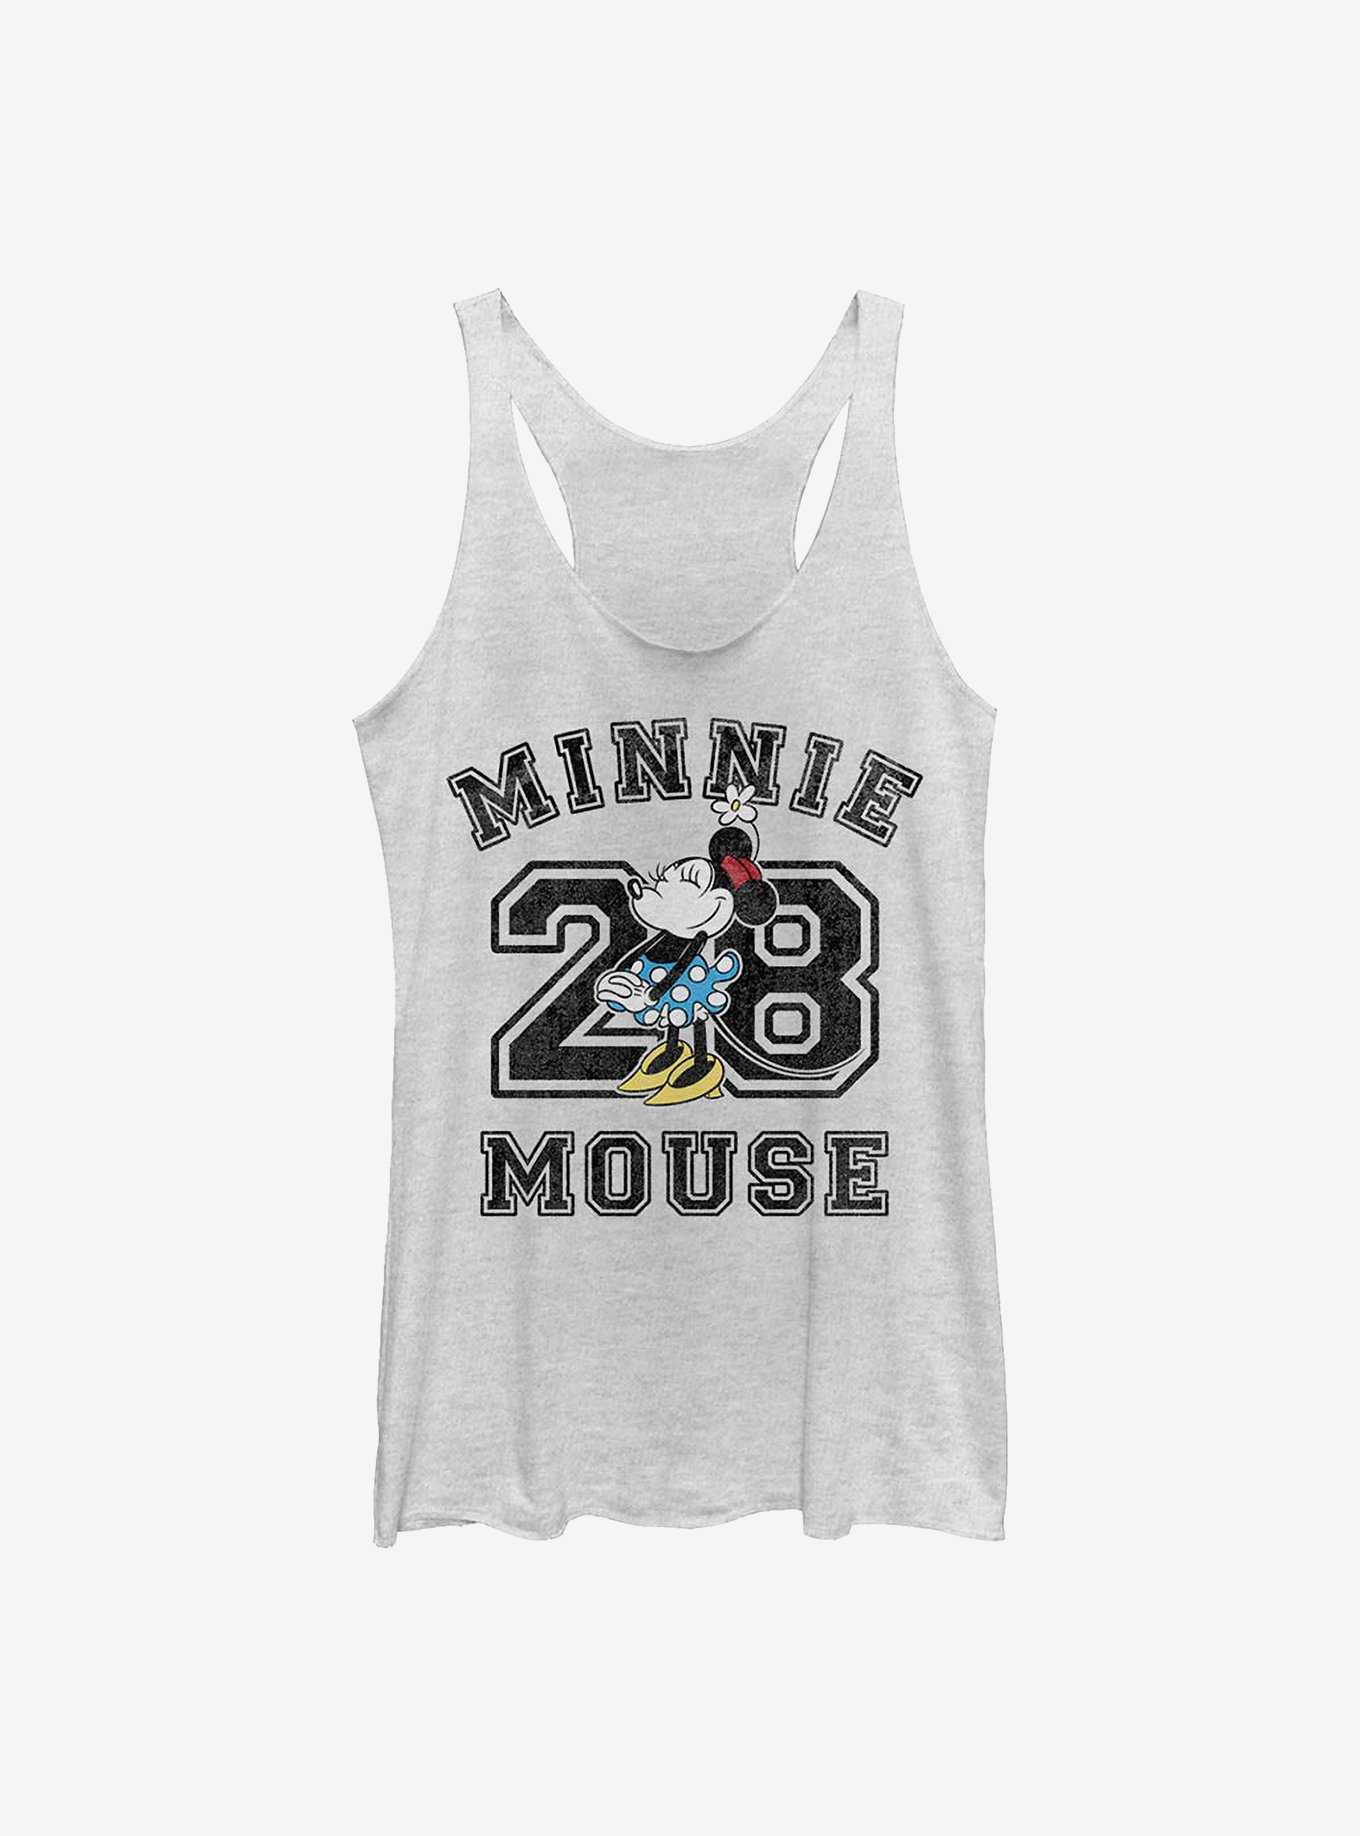 Disney Minnie Mouse Collegiate Womens Tank Top, , hi-res